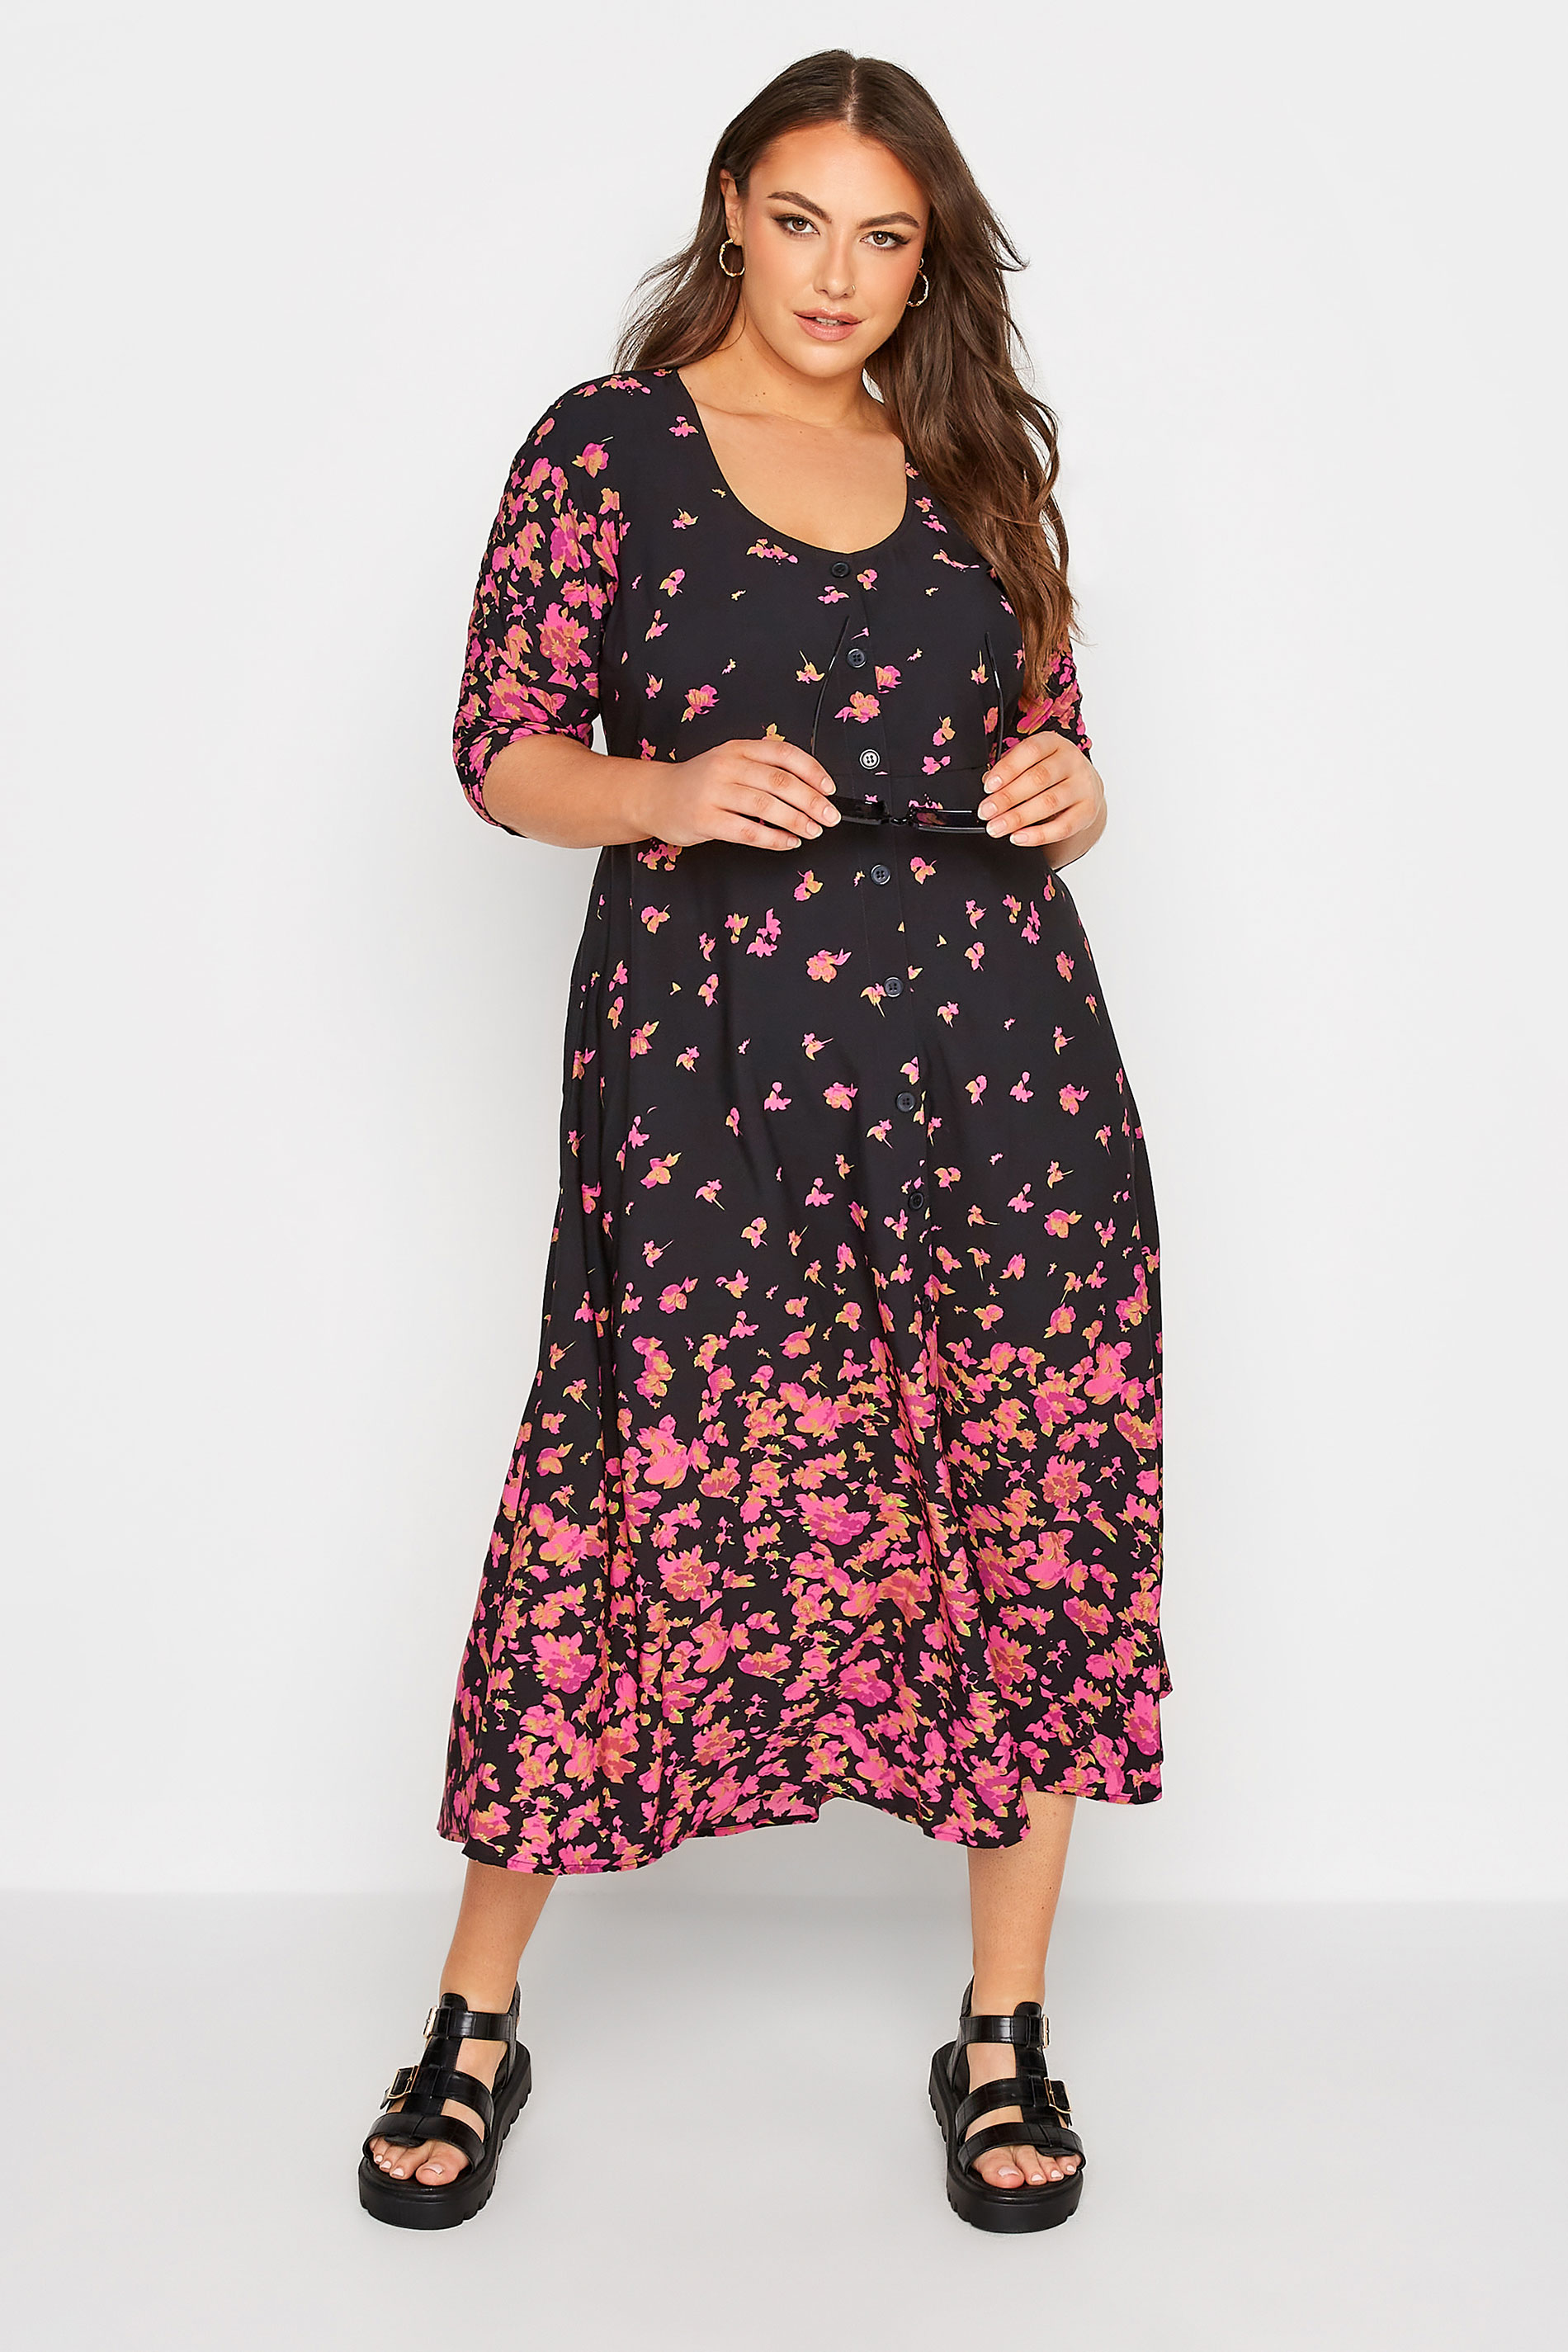 Robes Grande Taille Grande taille  Robes Imprimé Floral | LIMITED COLLECTION - Tea Dress Noire Bordures Floral Rose - RQ60873